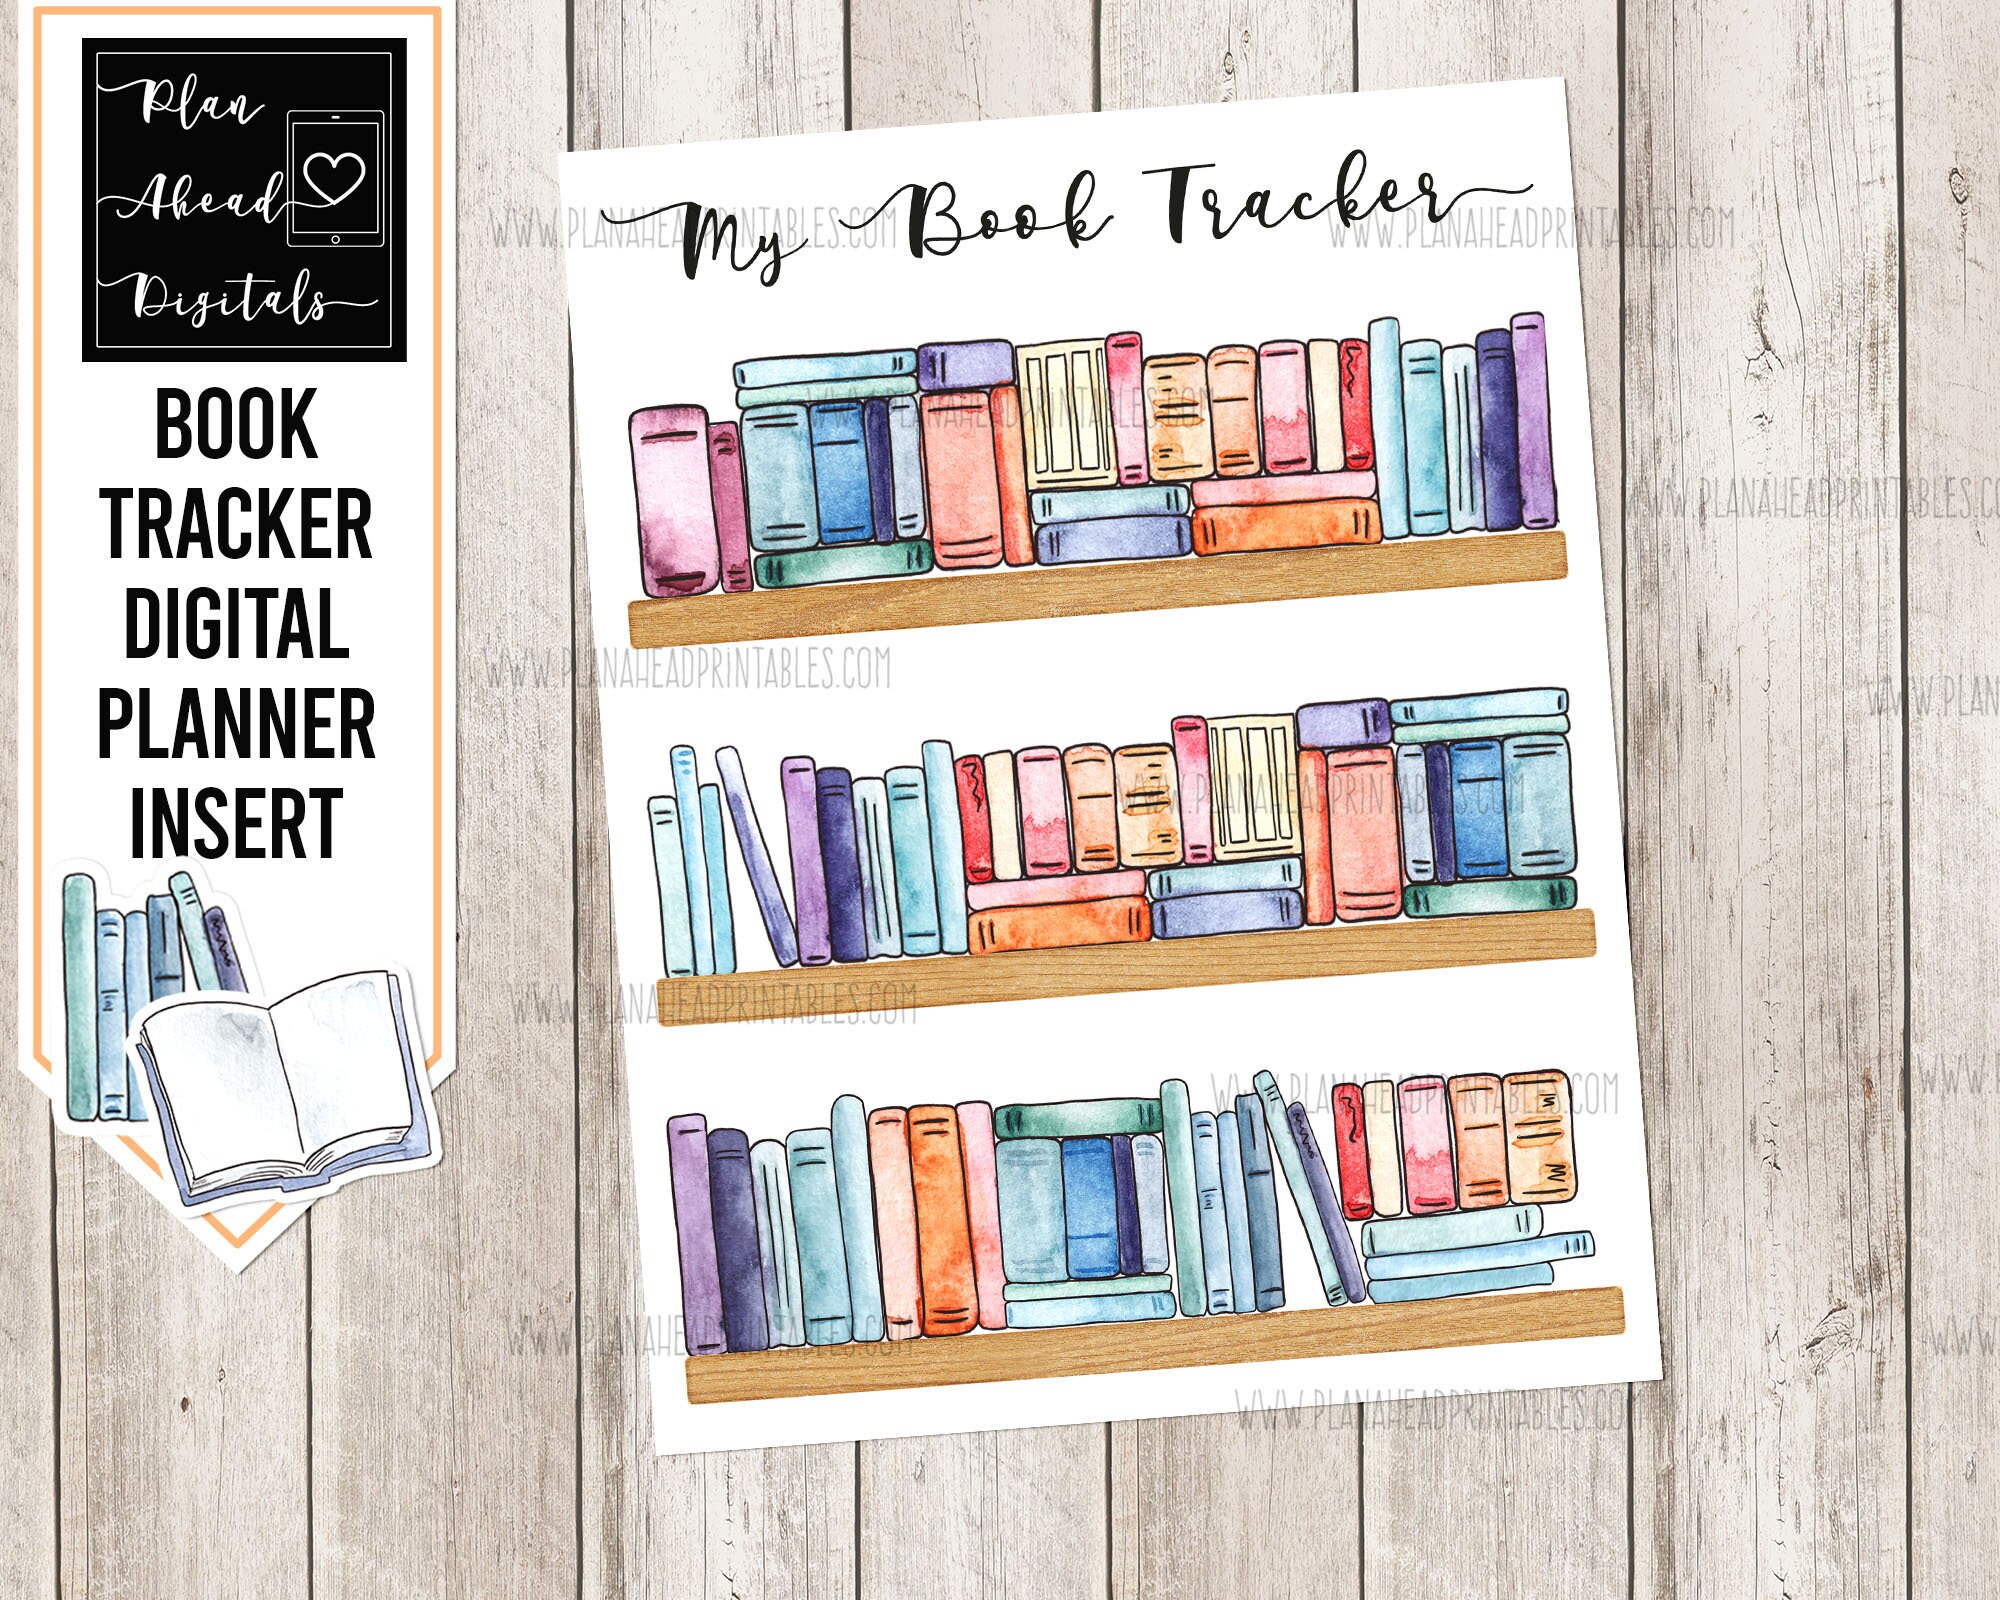 Bookshelf Monthly Reading Tracker Bullet Journal Book Tracker Bookmark  Selfmade Reading List Eco-friendly 